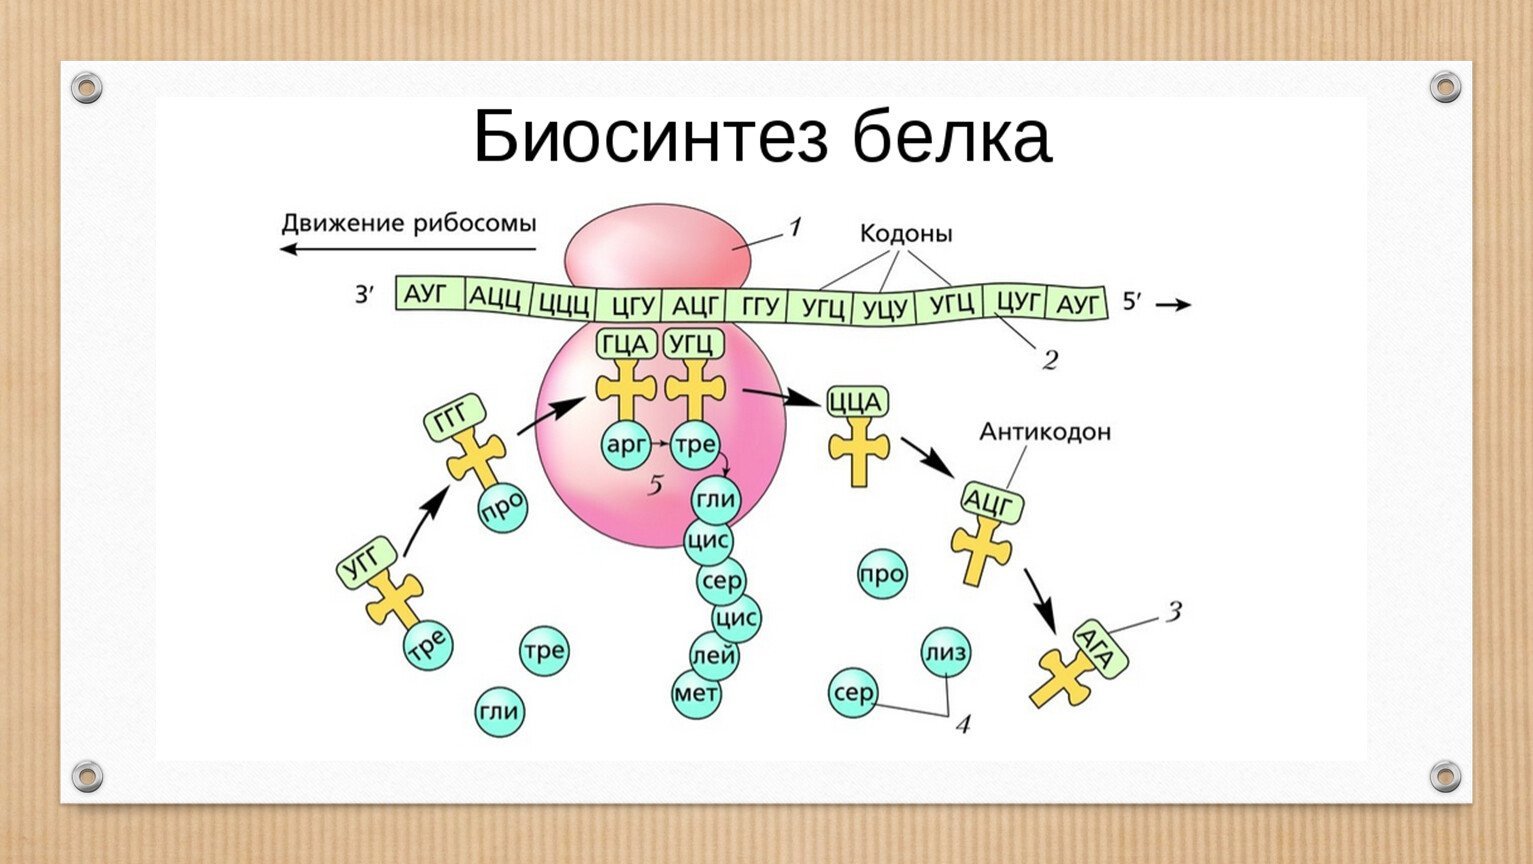 Биосинтез мономеров. Биосинтез белка схема 9 класс биология. Биосинтез белка биология в схемах. Биосинтез белка биология 11 класс.